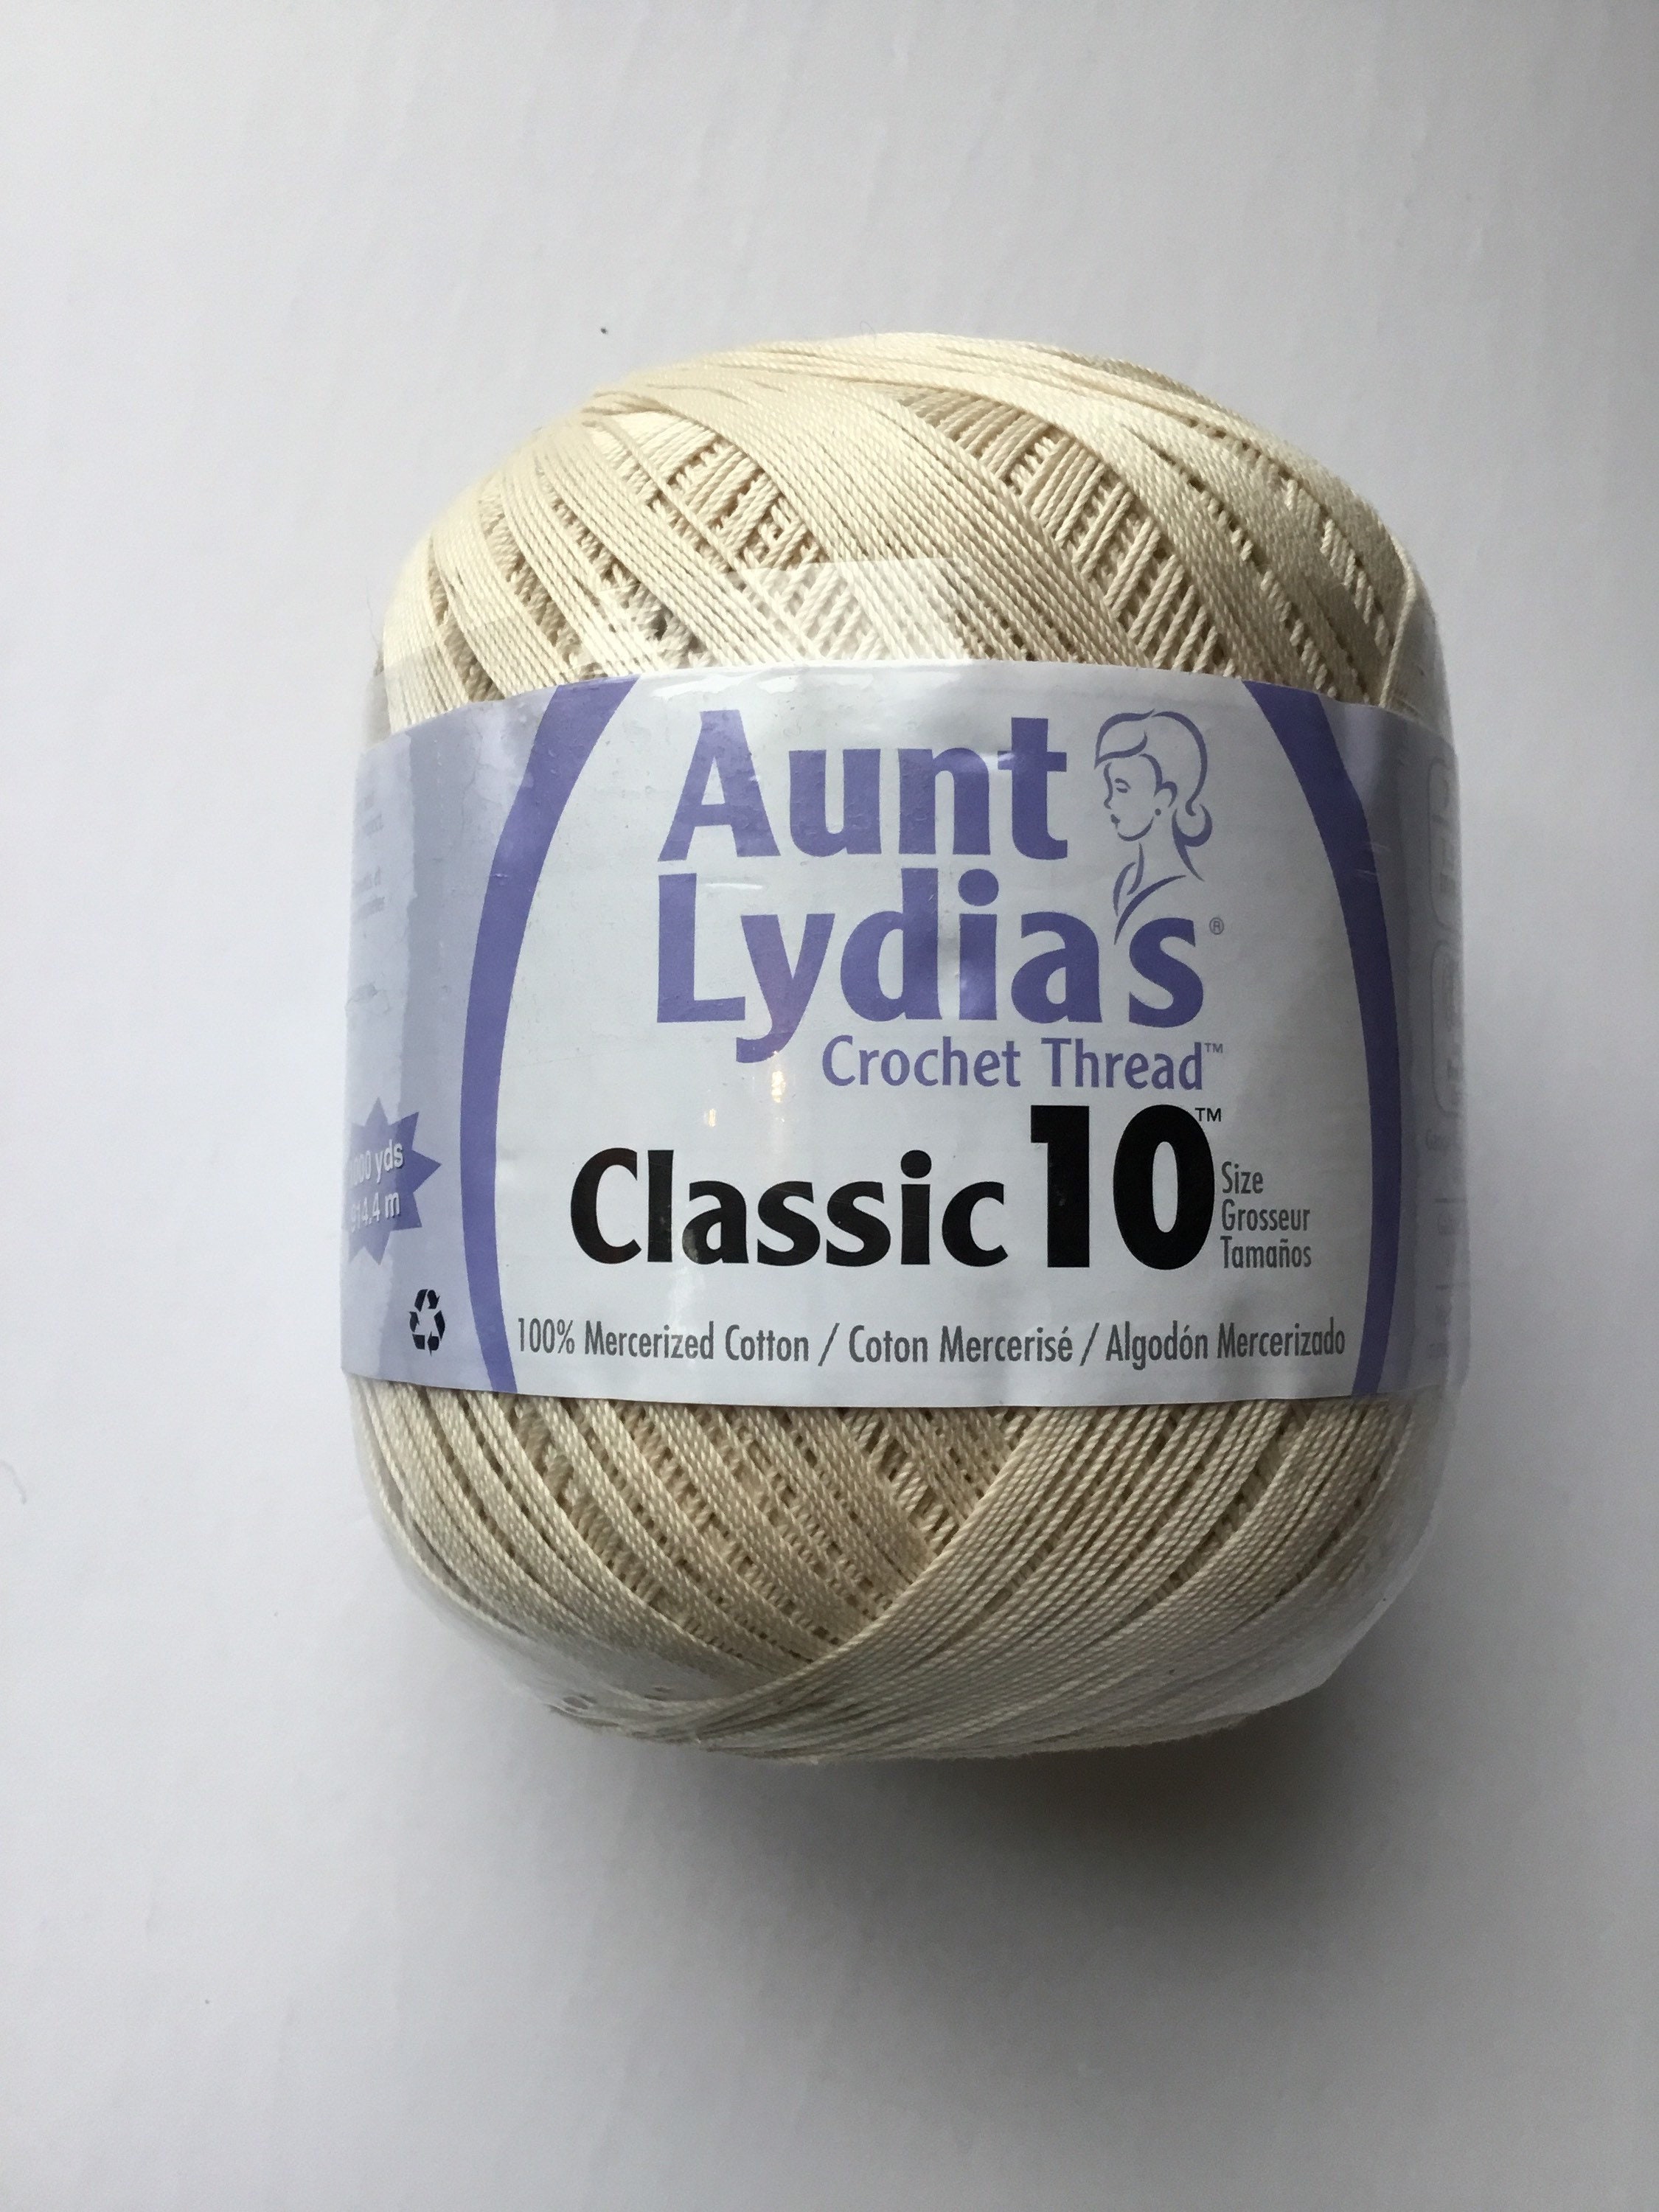 Aunt Lydias Crochet Thread Classic 10 1000 Yds 914.4 Ireland